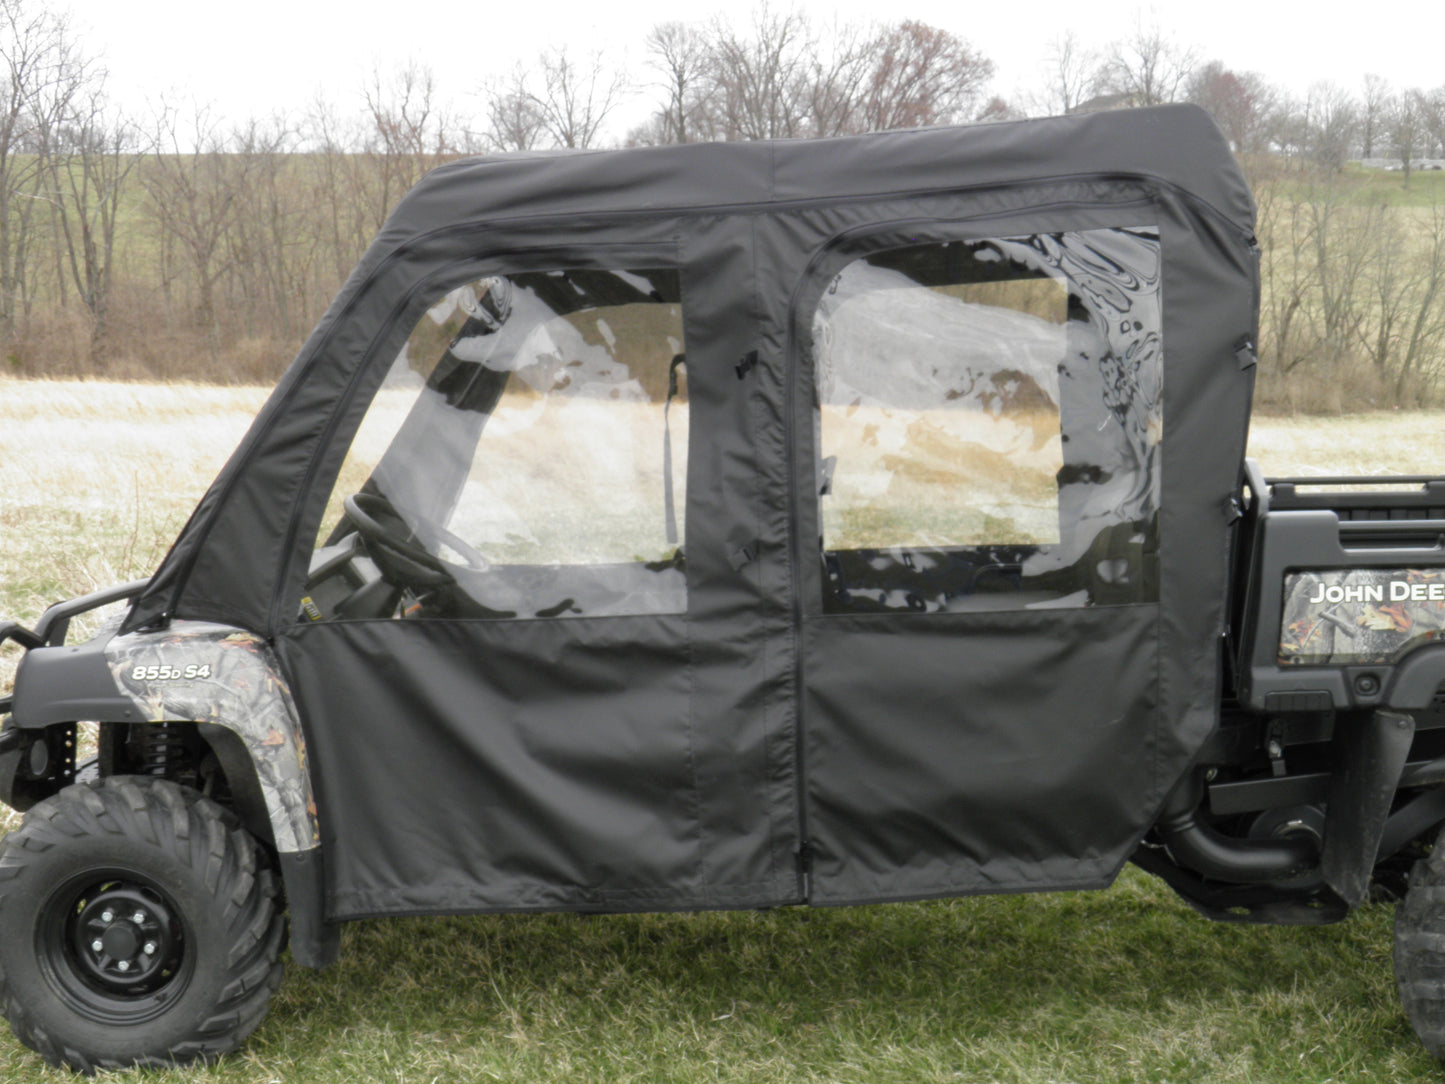 John Deere Gator 550/560/590 4-Seater - Full Cab Enclosure for Hard Windshield - 3 Star UTV